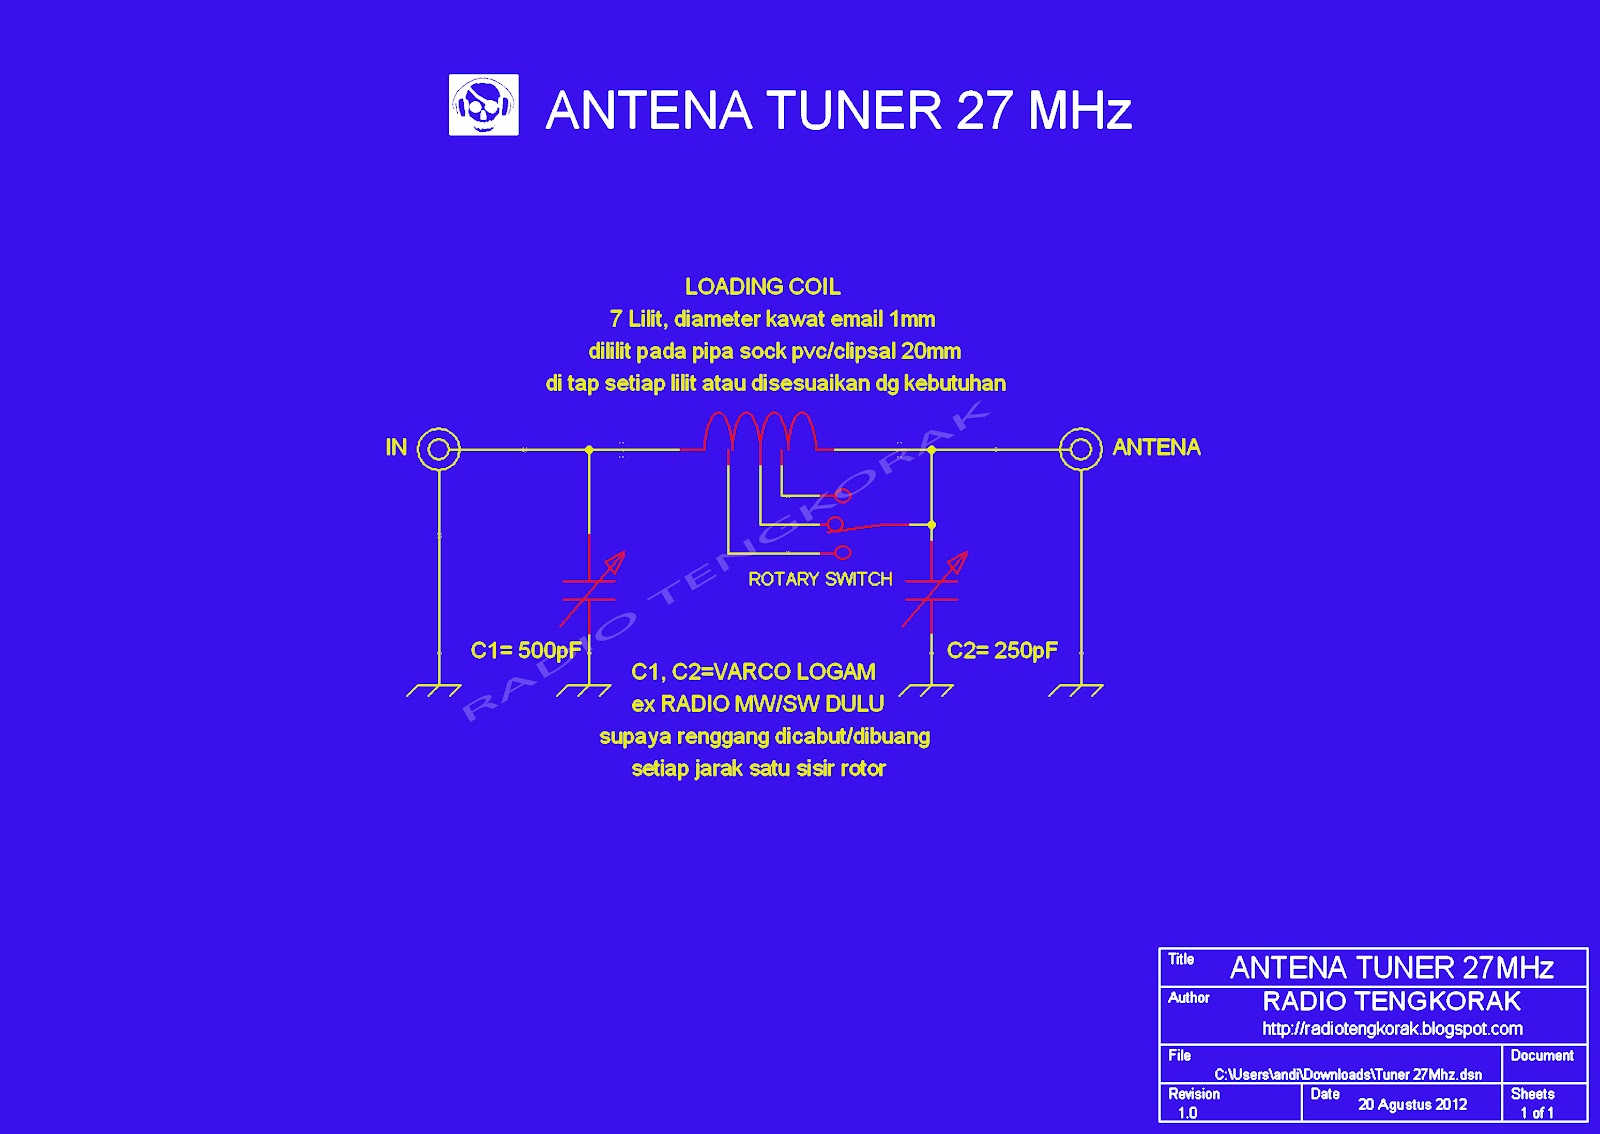 RADIO TENGKORAK ANTENA TUNER 27 MHz